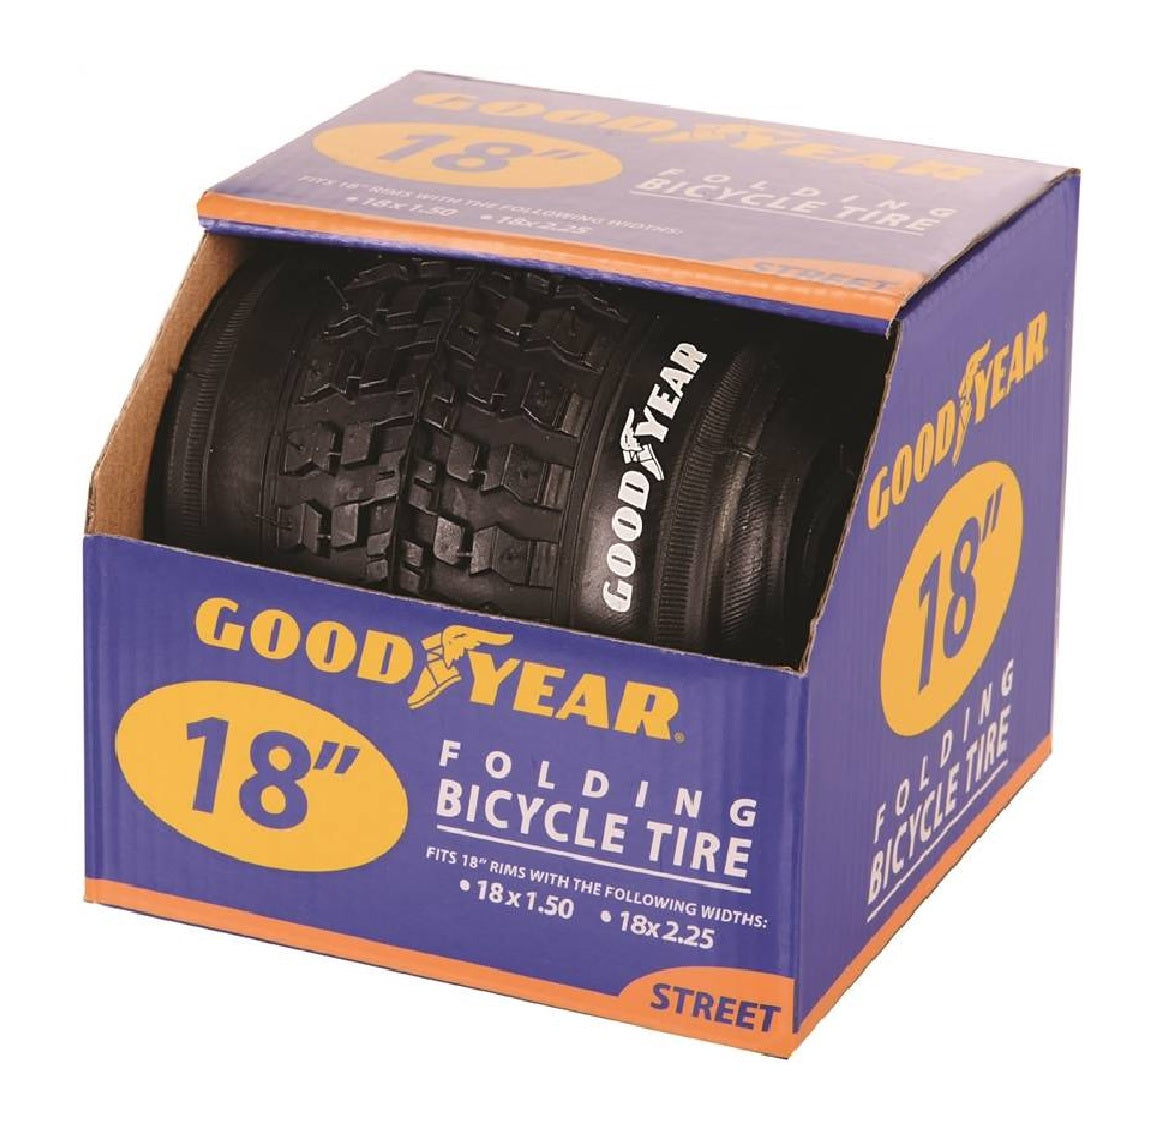 Goodyear 91110 18" Folding Bike Tire, Black